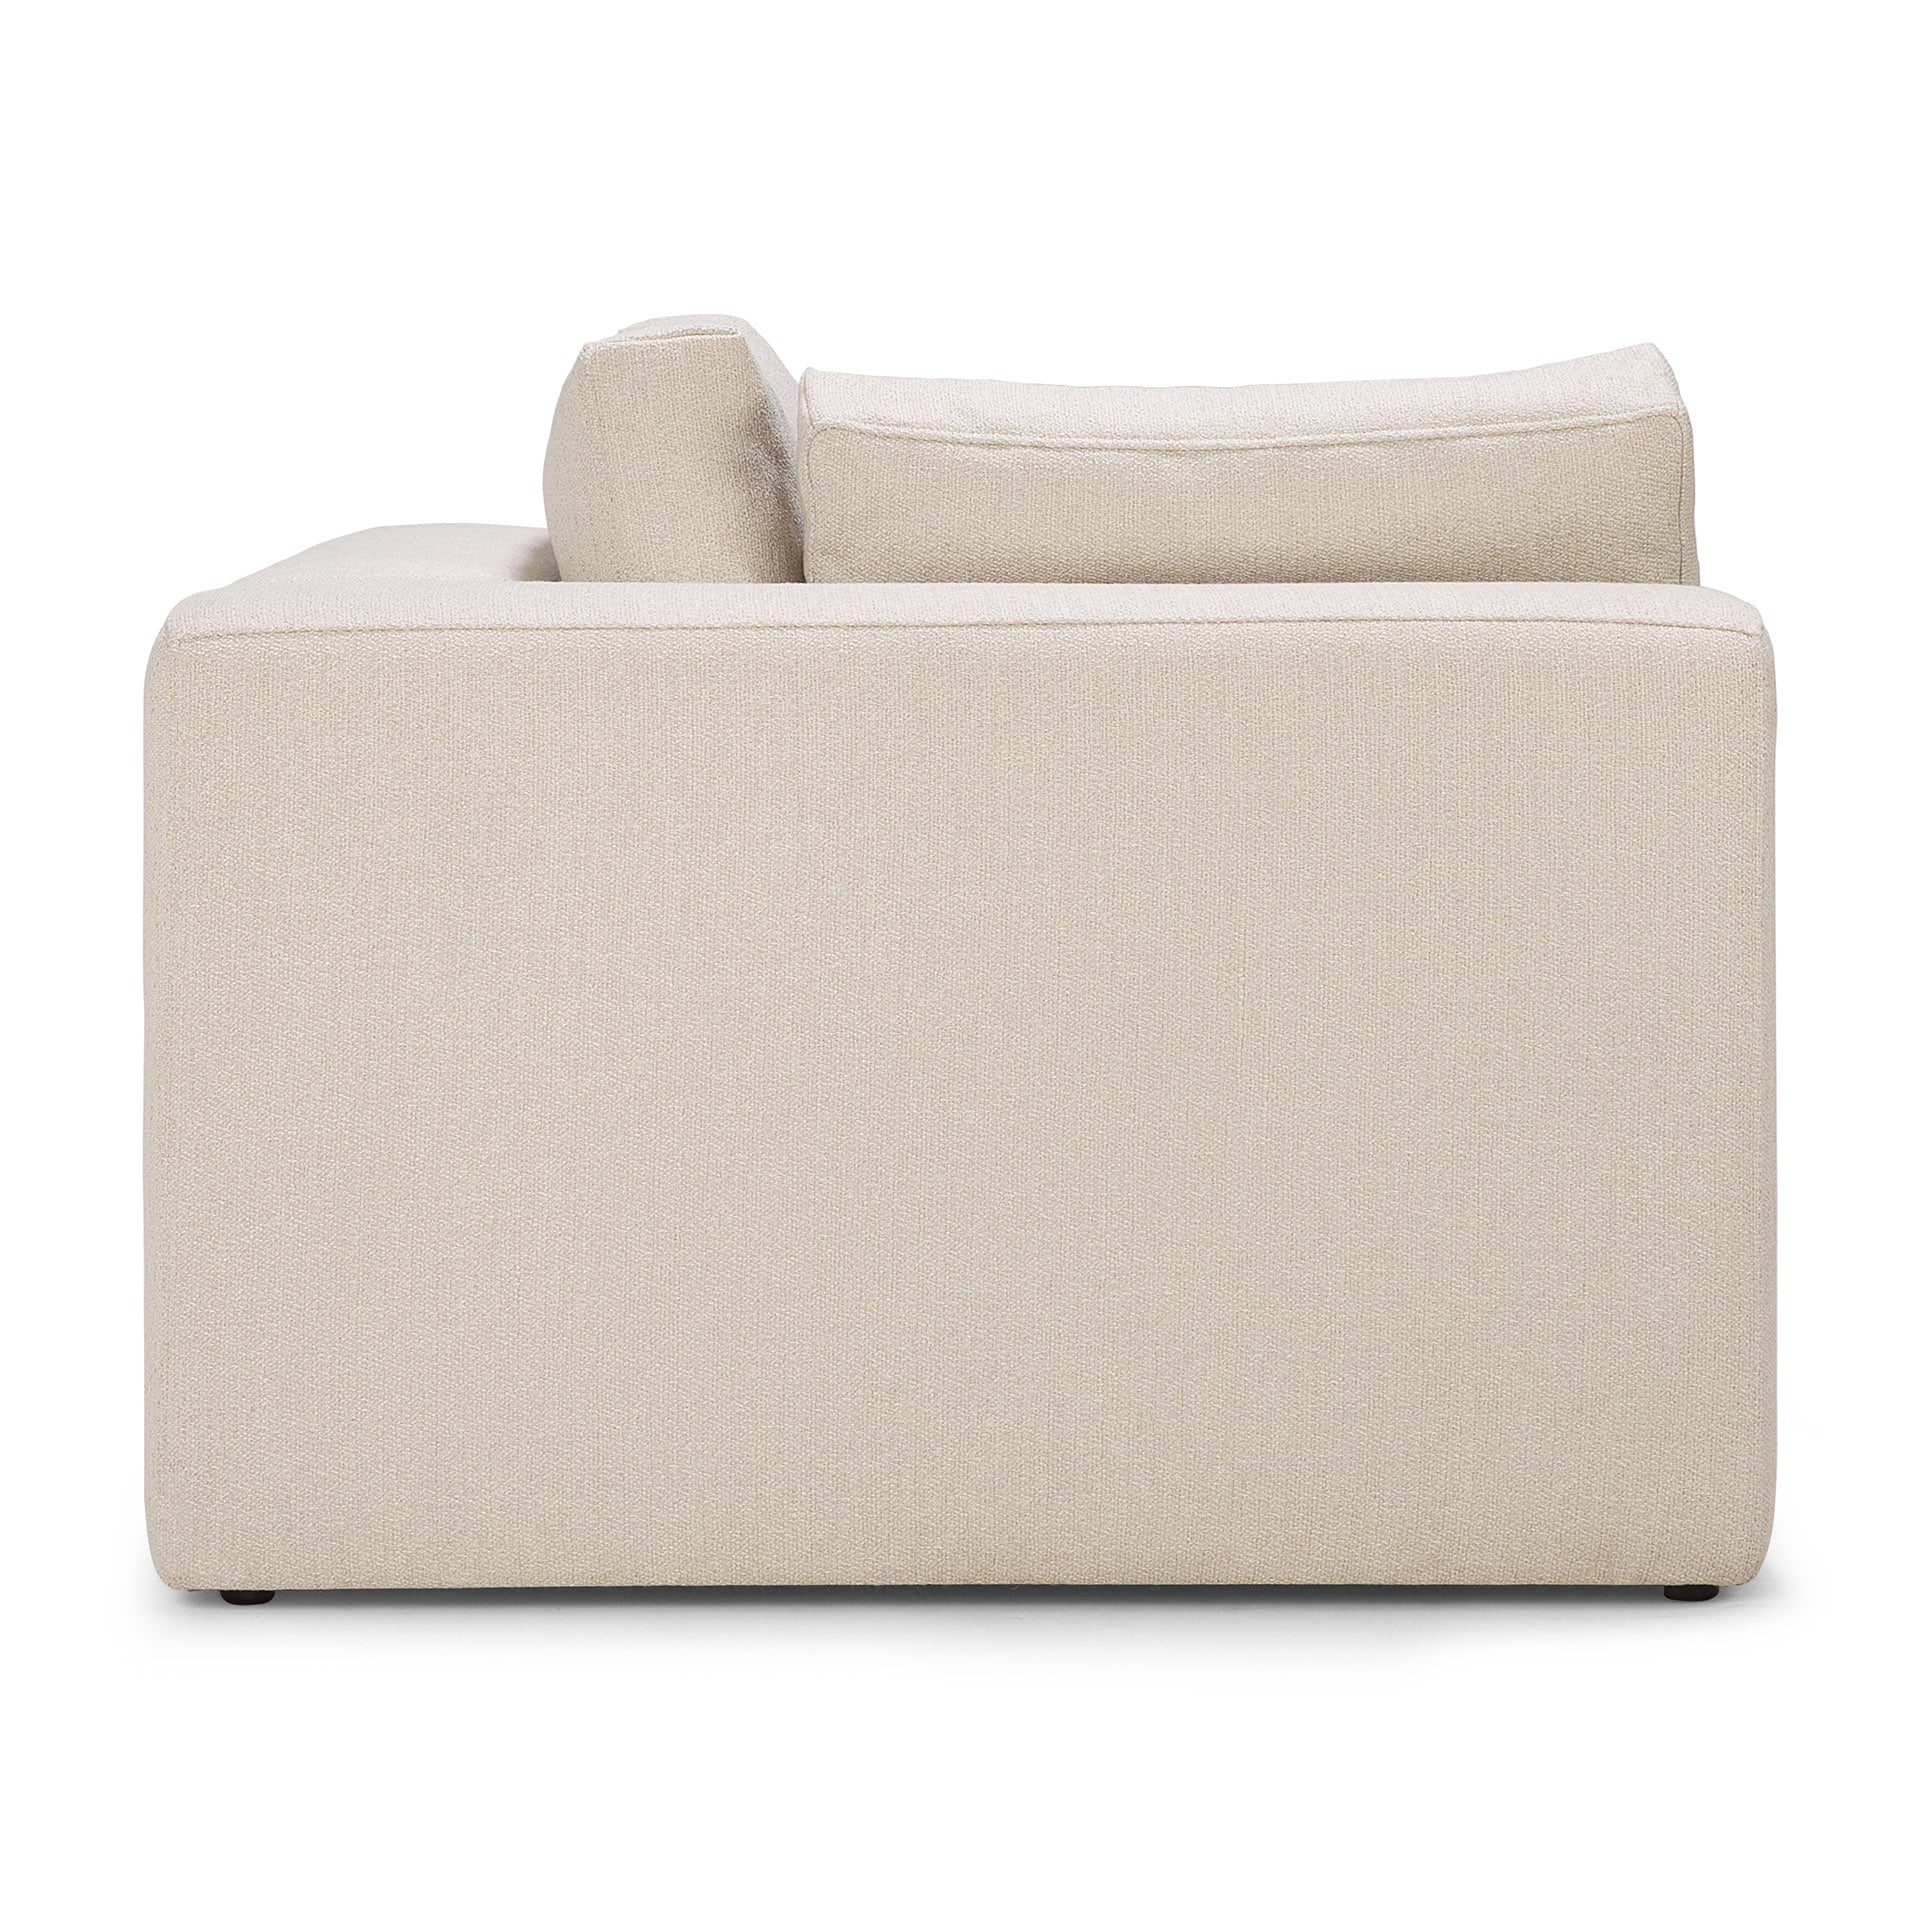 Mellow Corner Eco Fabric Sofa, Off White